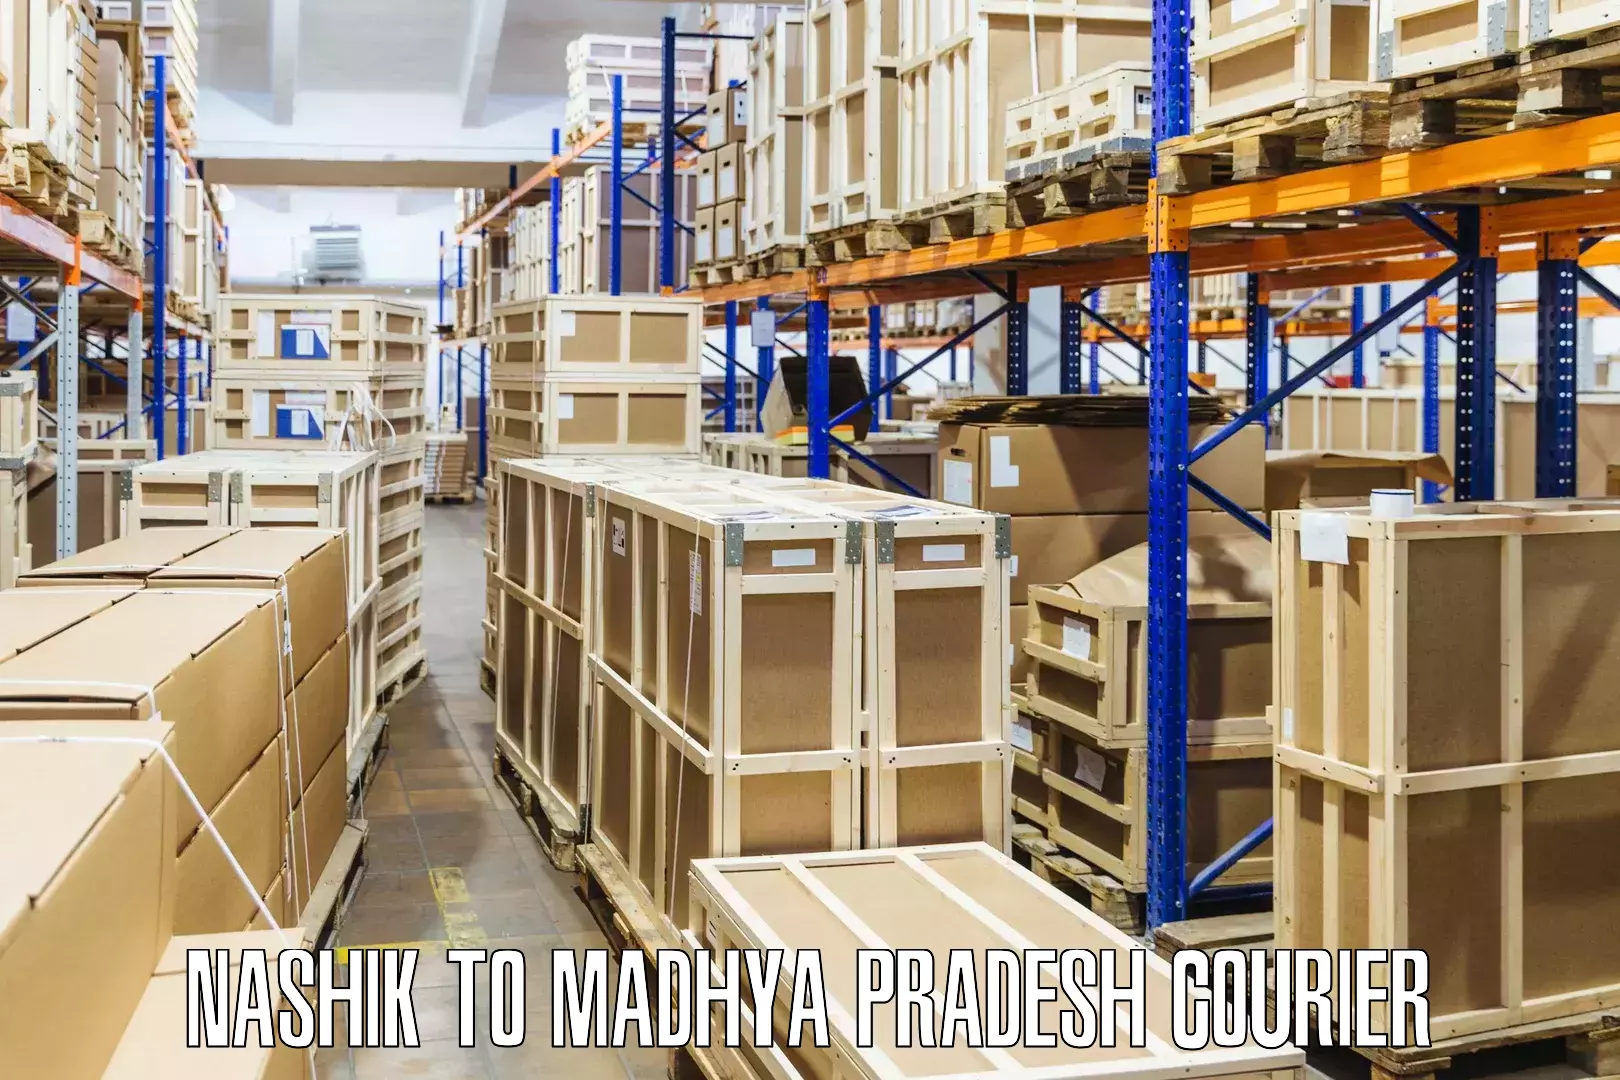 Discounted shipping in Nashik to IIIT Bhopal